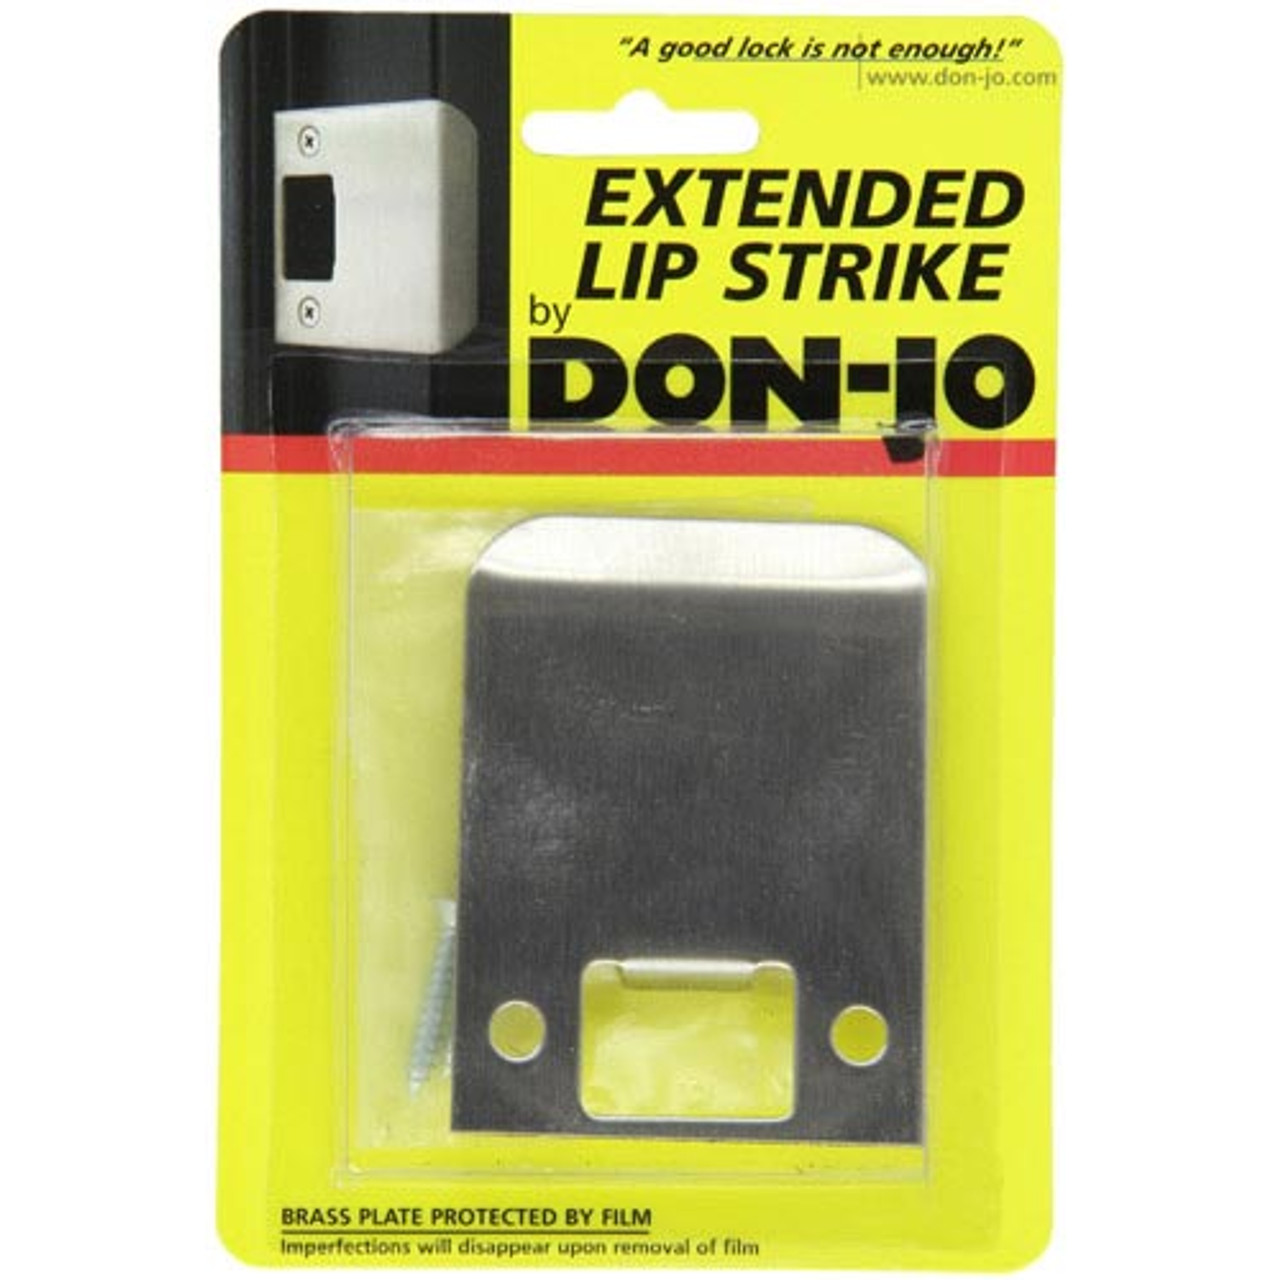 EL-125-DU Don Jo 2-1/4" Extended Lip Strike in Duro Coated Finish